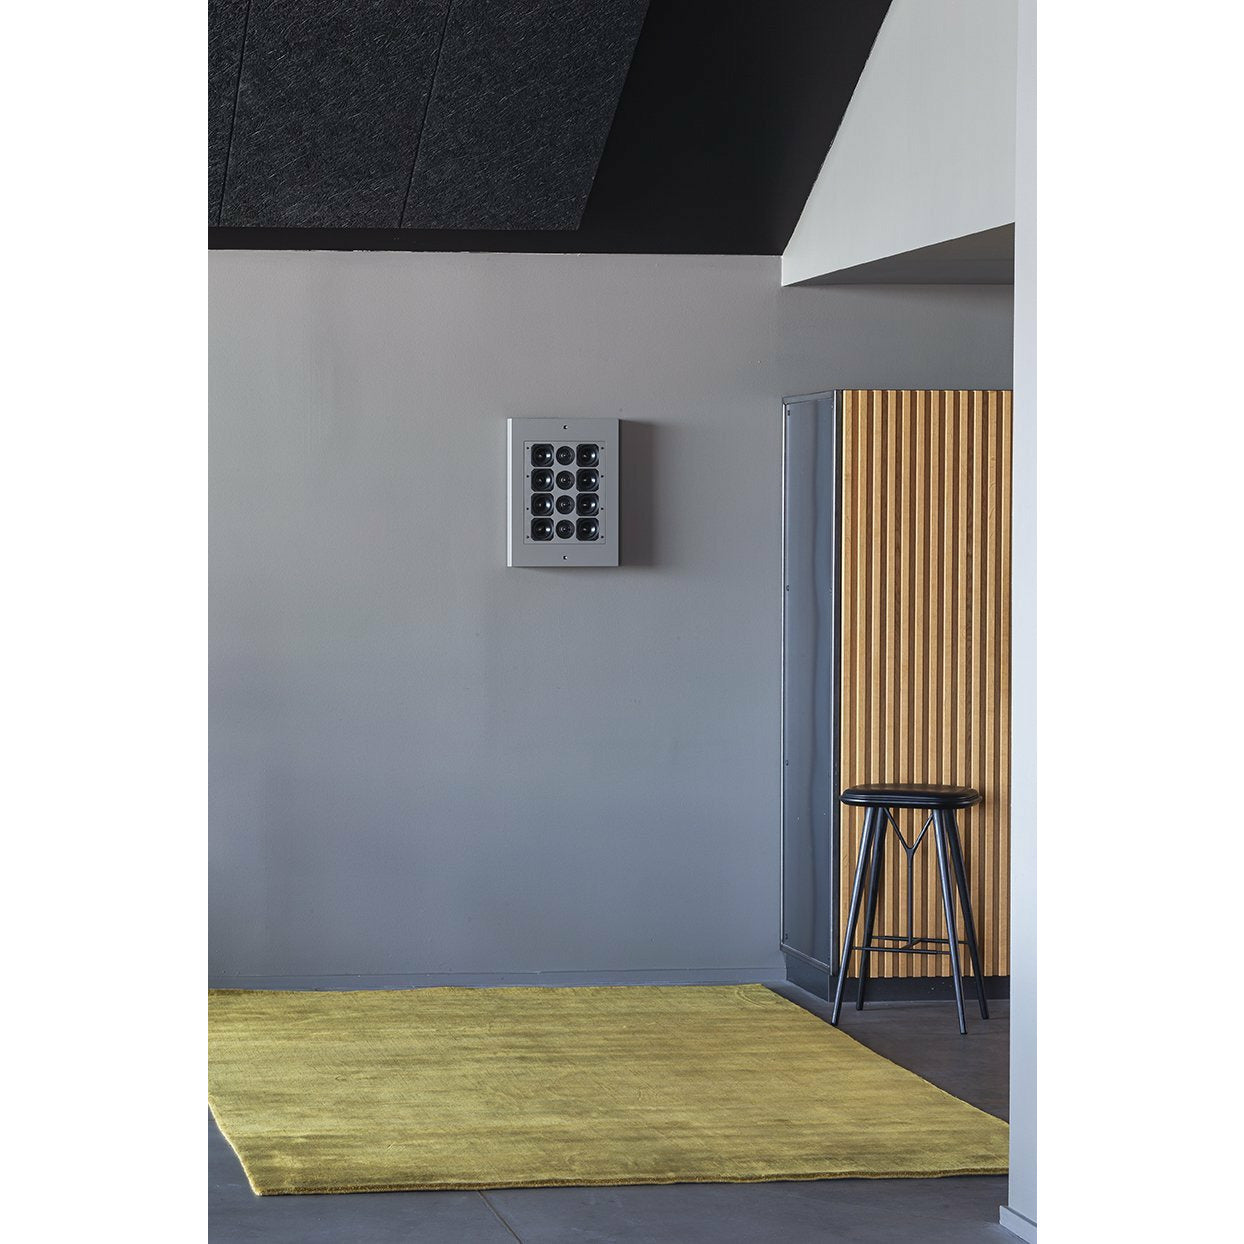 Massimo Earth Bamboo alfombra china amarillo, 140x200 cm